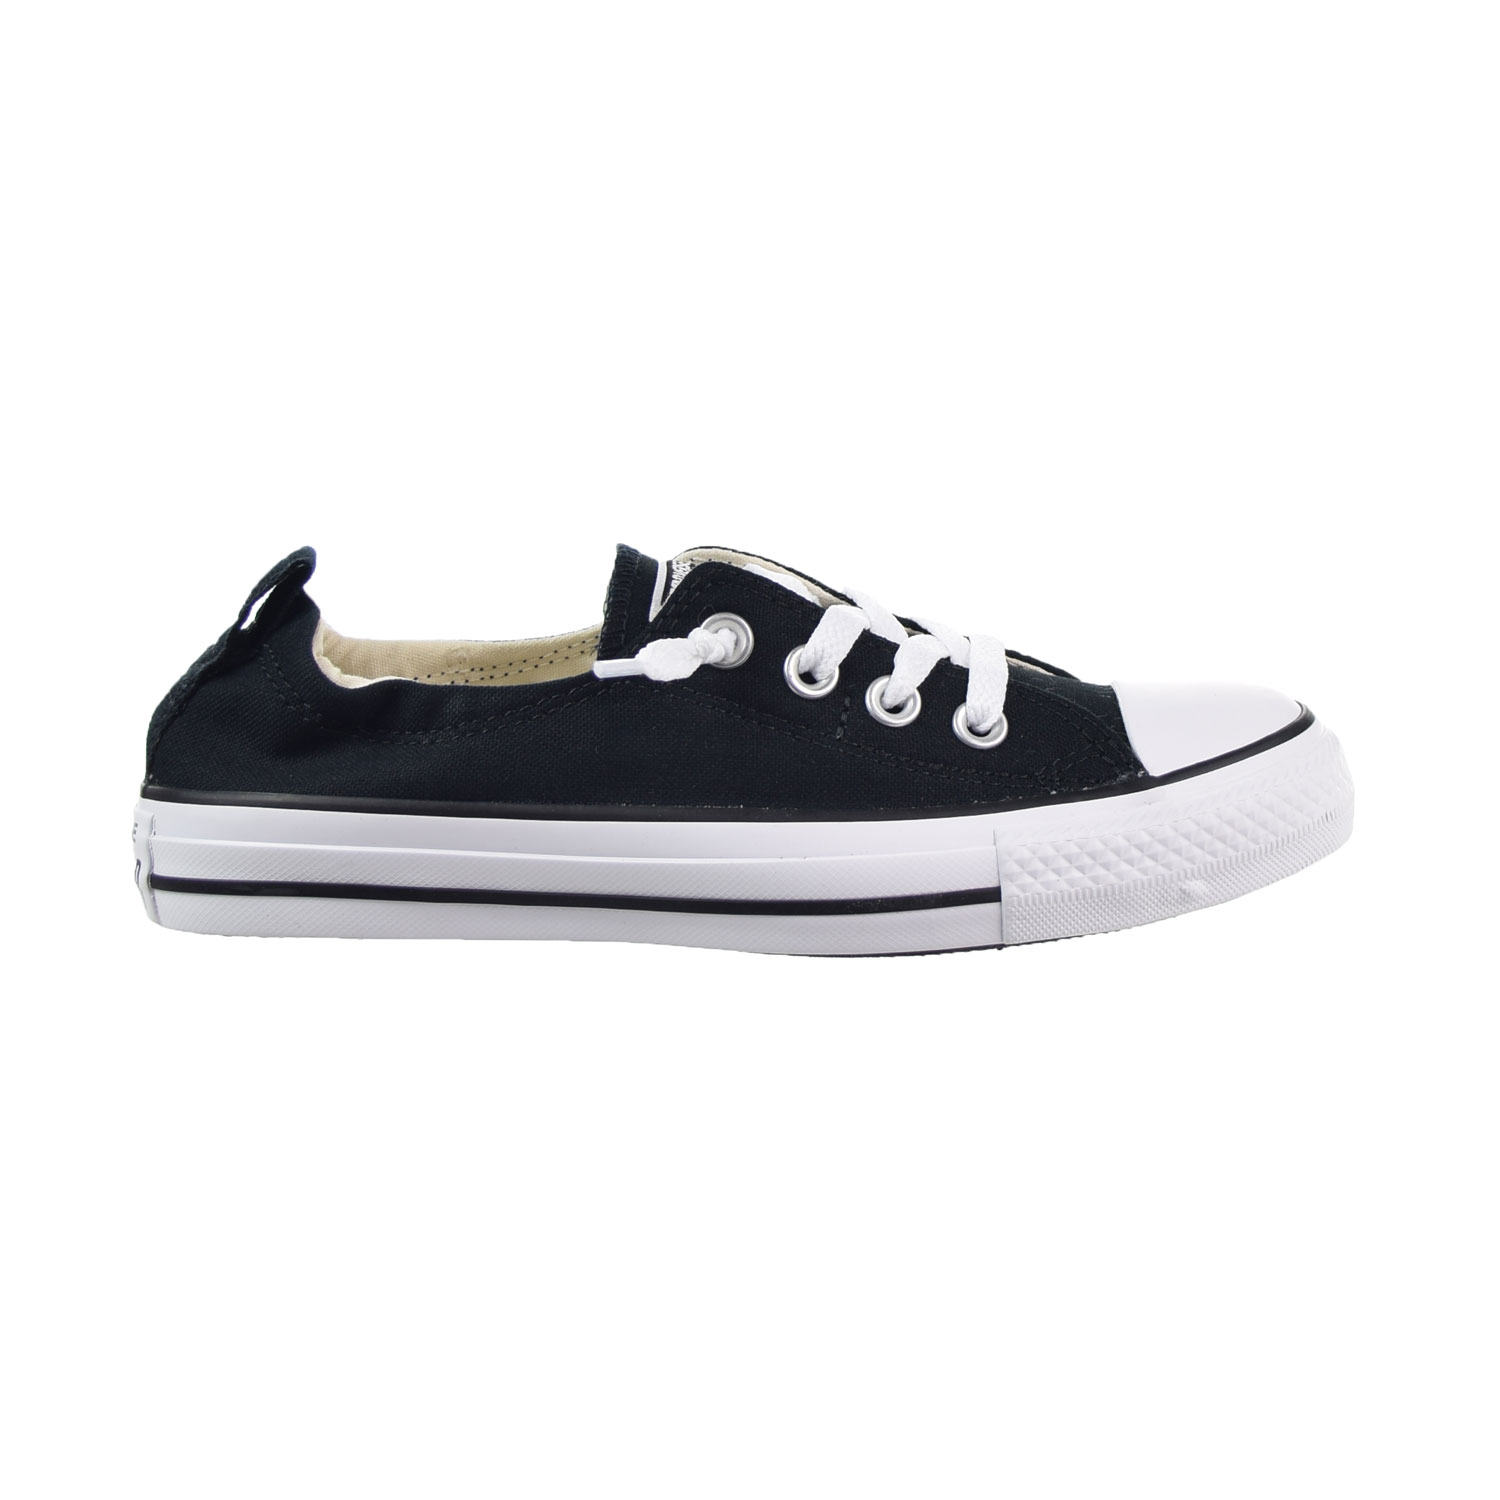 Converse Chuck Taylor All Star Shoreline Womens Slip-On Shoes Black 537081f  (6 B(M) US)